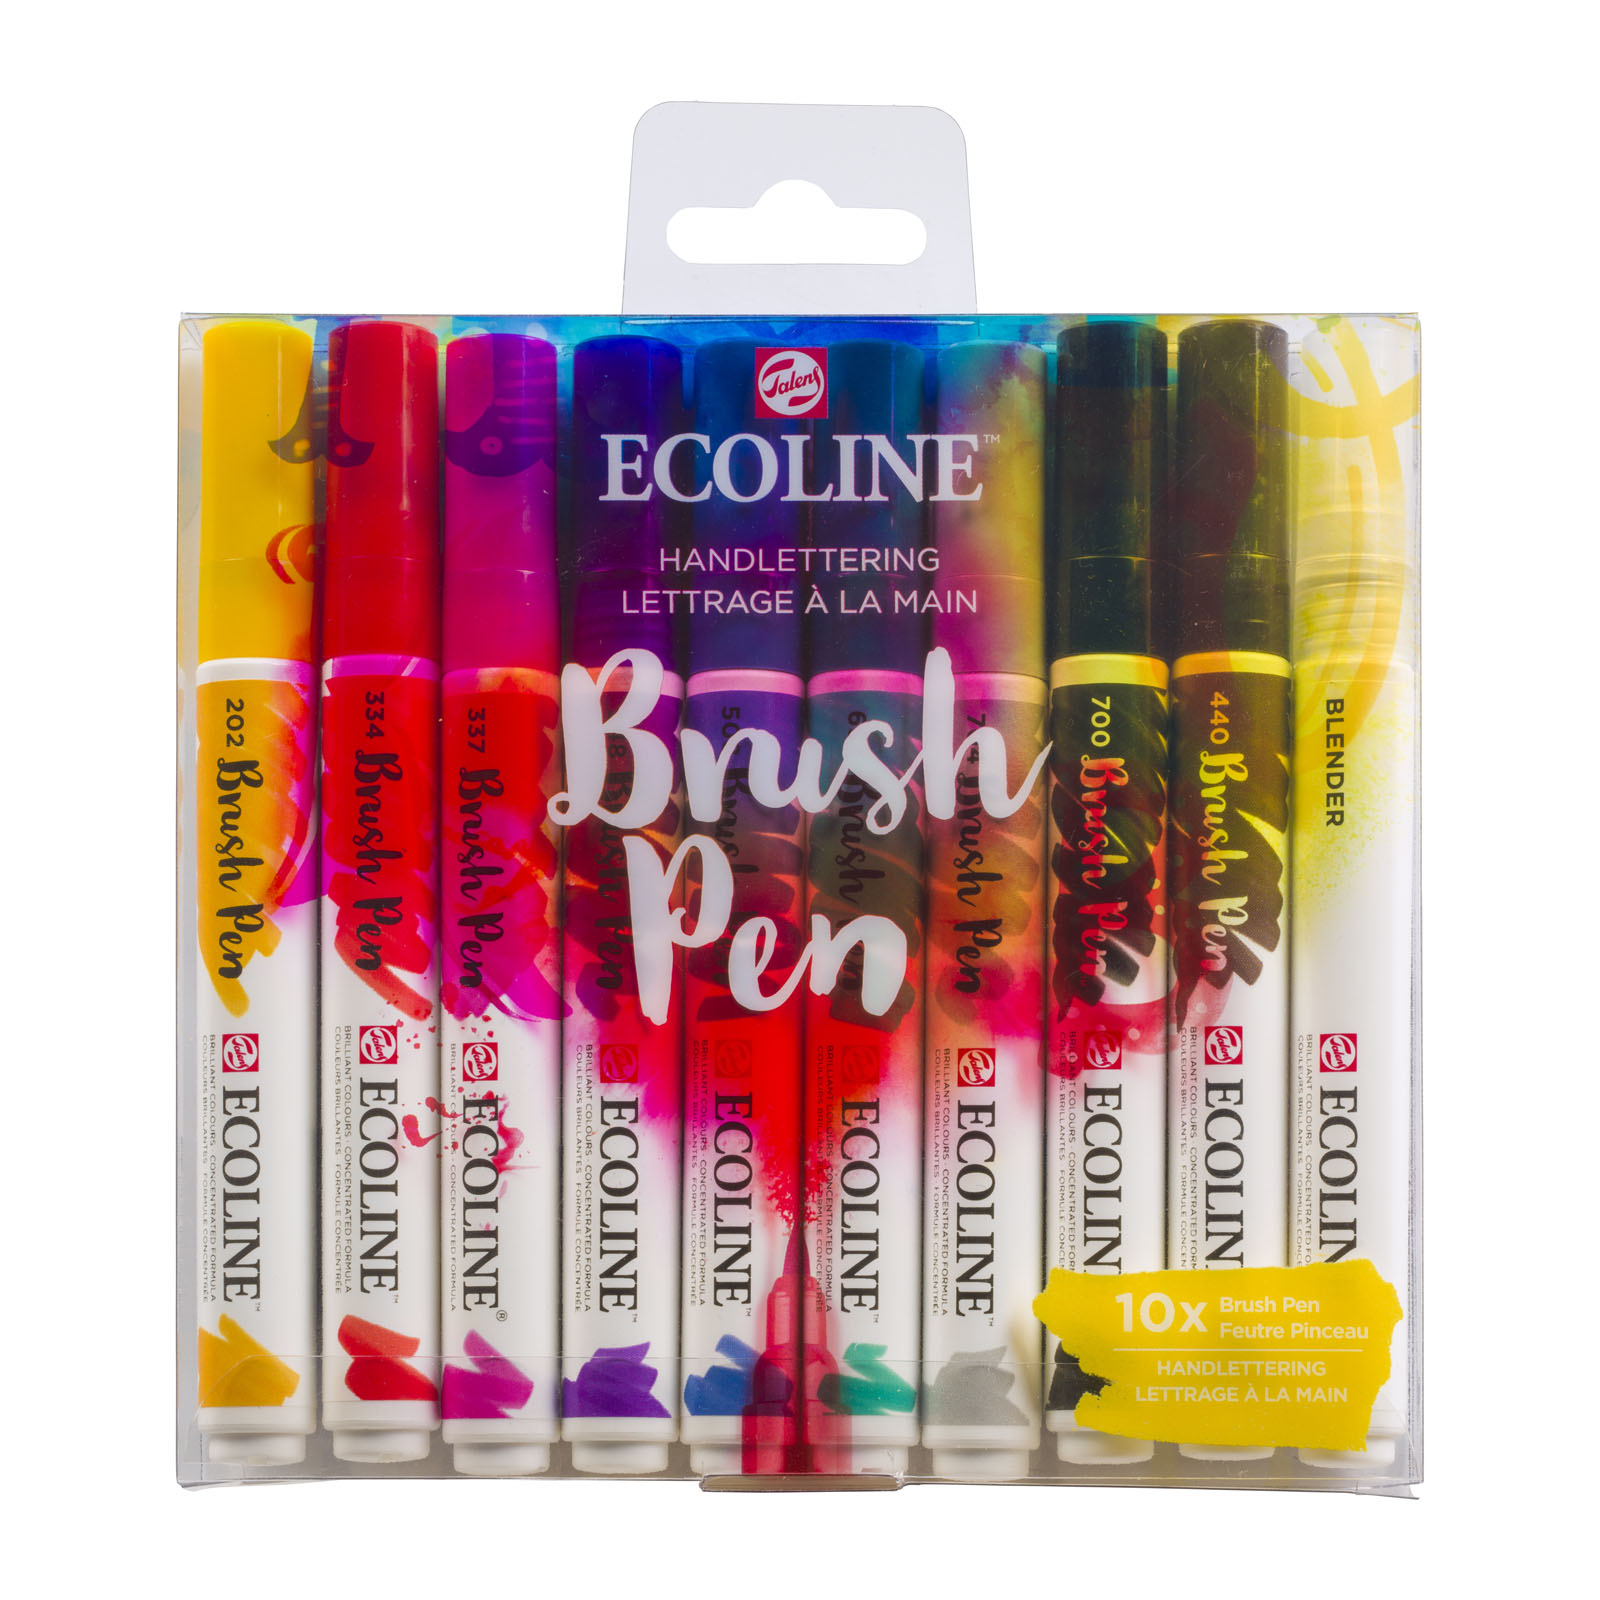 Ecoline • Set van 10 Brush Pens Handlettering